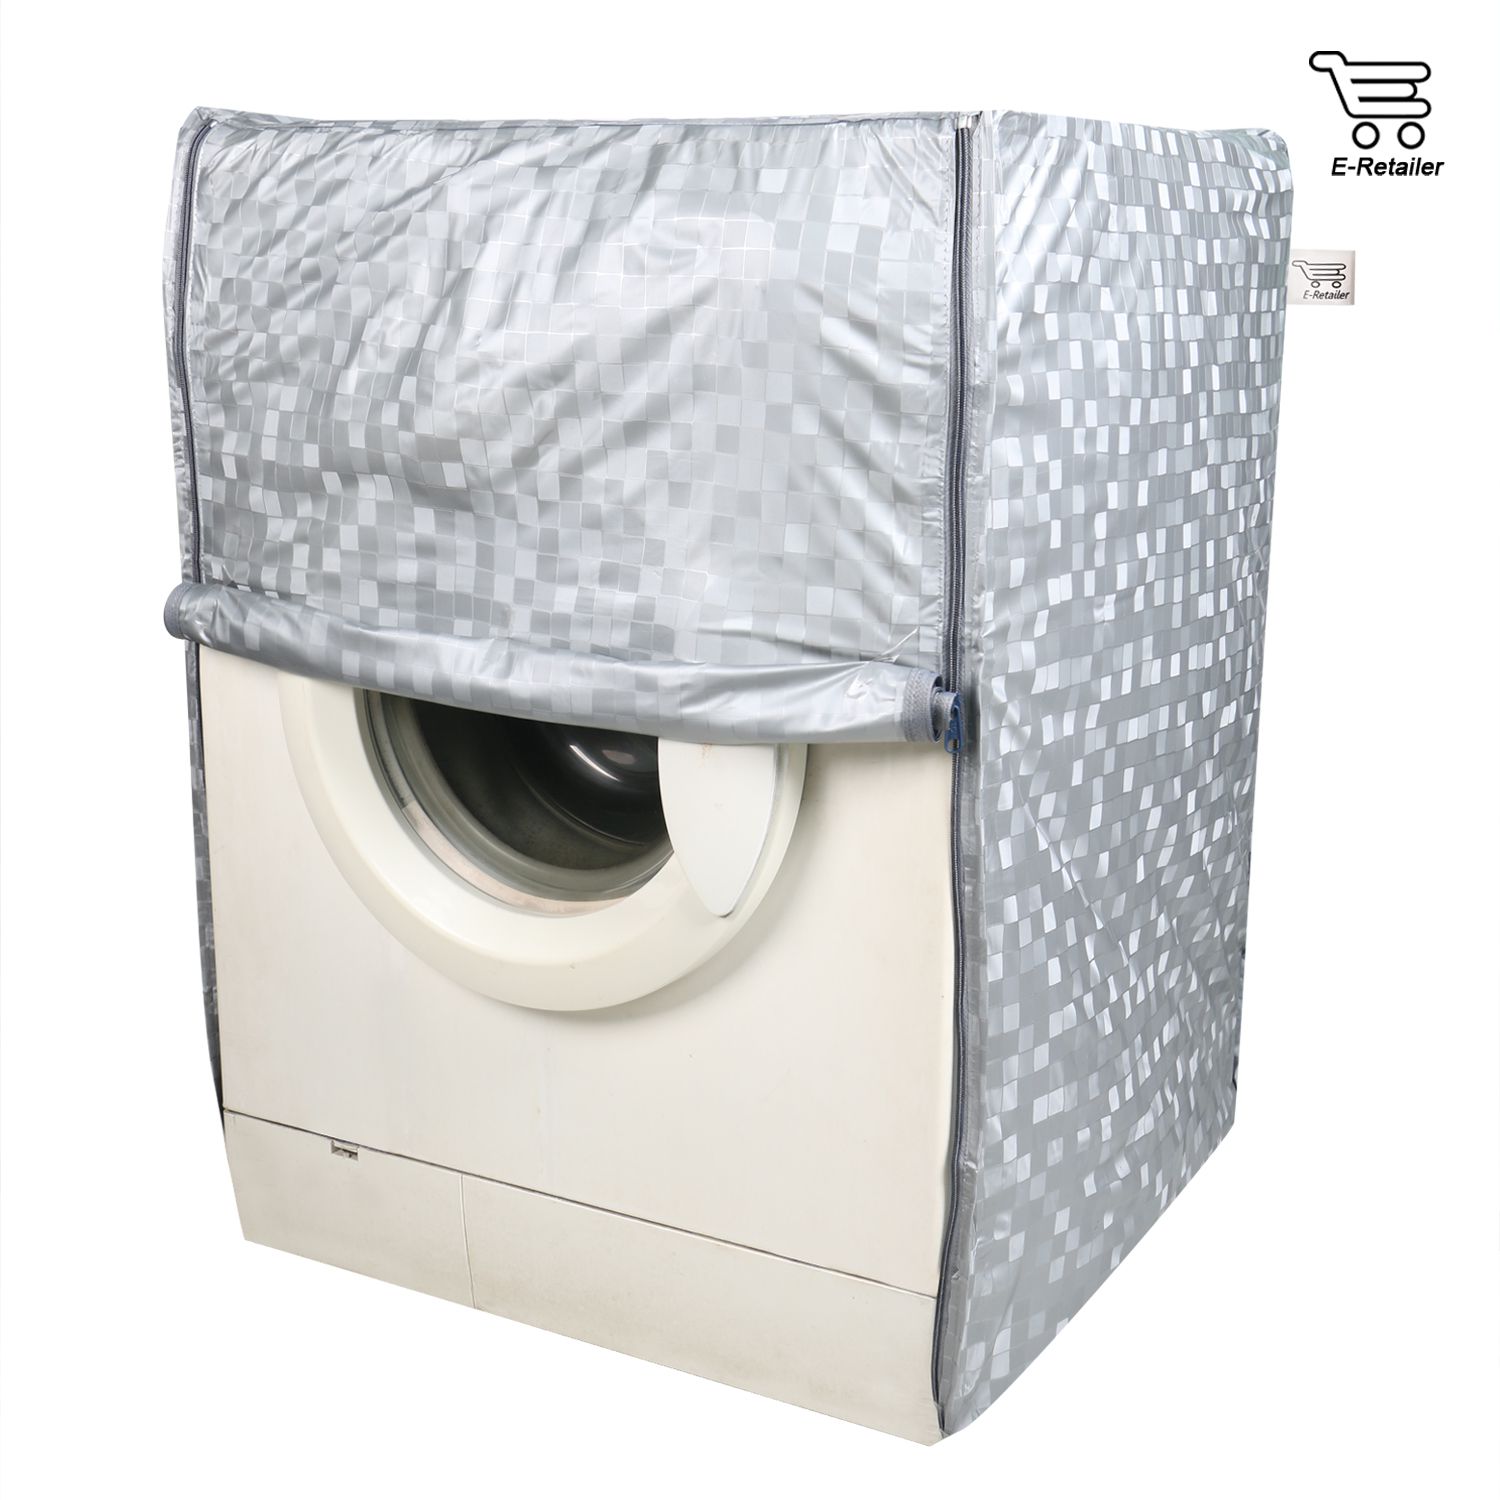     			E-Retailer Single PVC Gray Square Design Front Loading 5 KG To 8 KG Washing Machine Covers